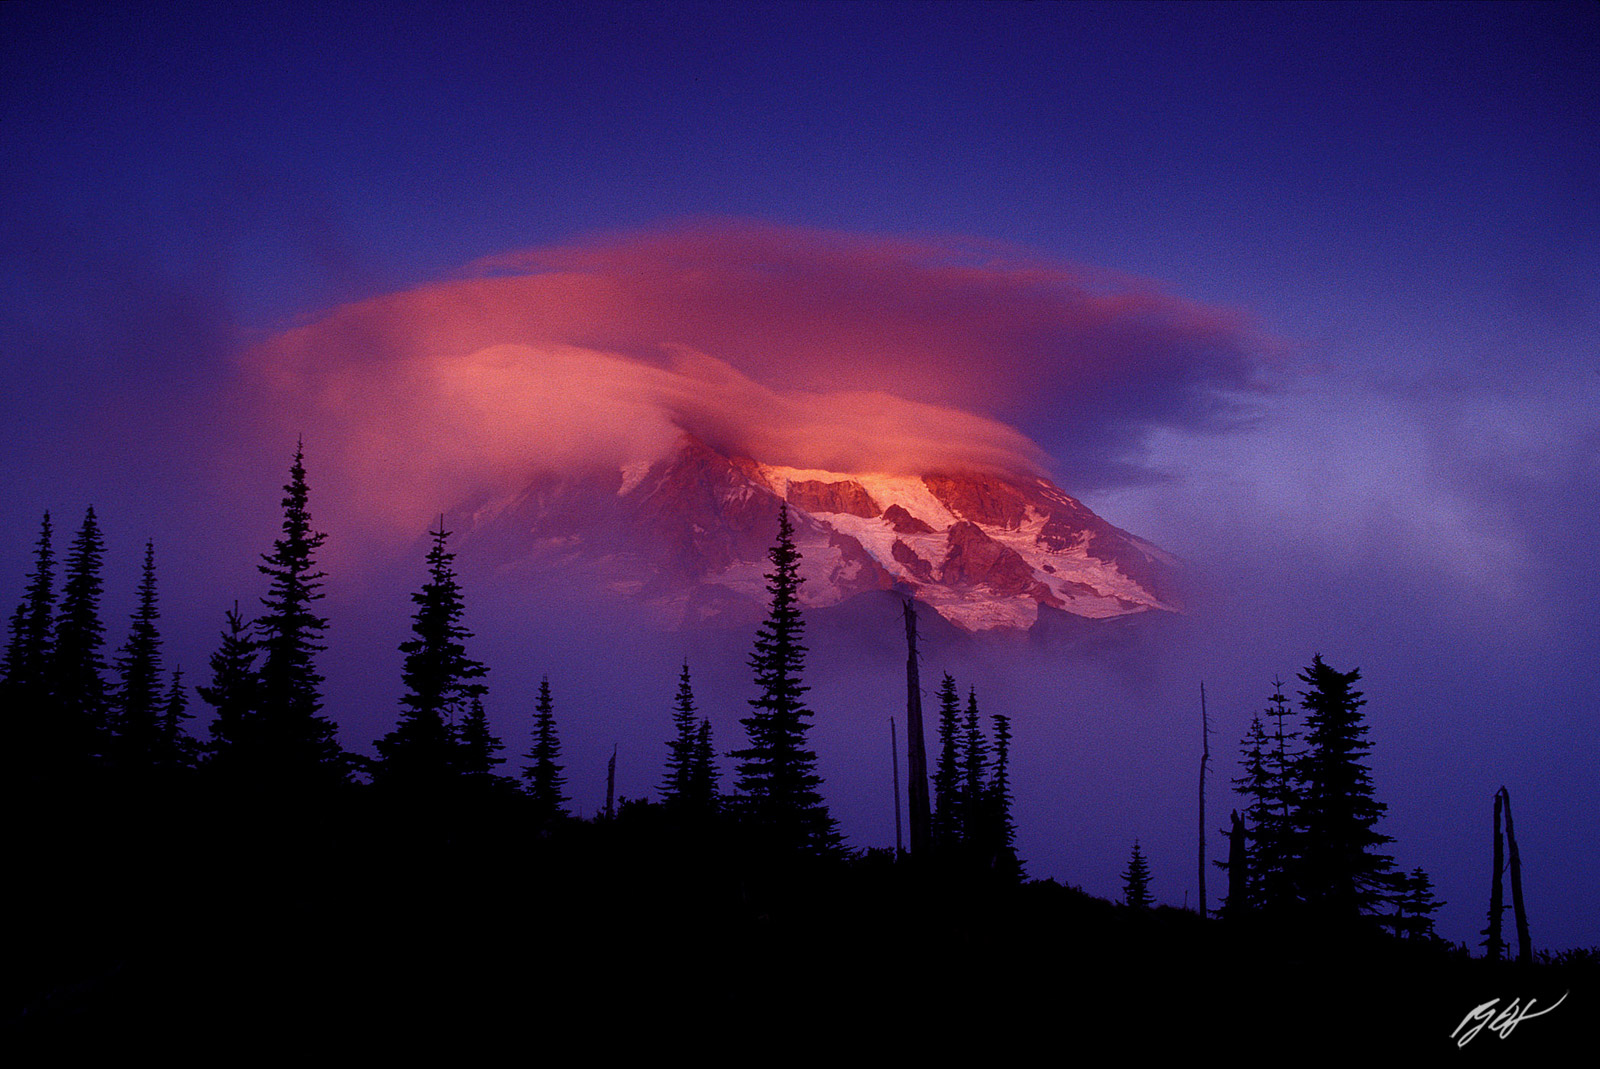 Sunset Lenticular Cloud and Mt Rainier from the Wonderland Trail in Mt Rainier National Park in Washington